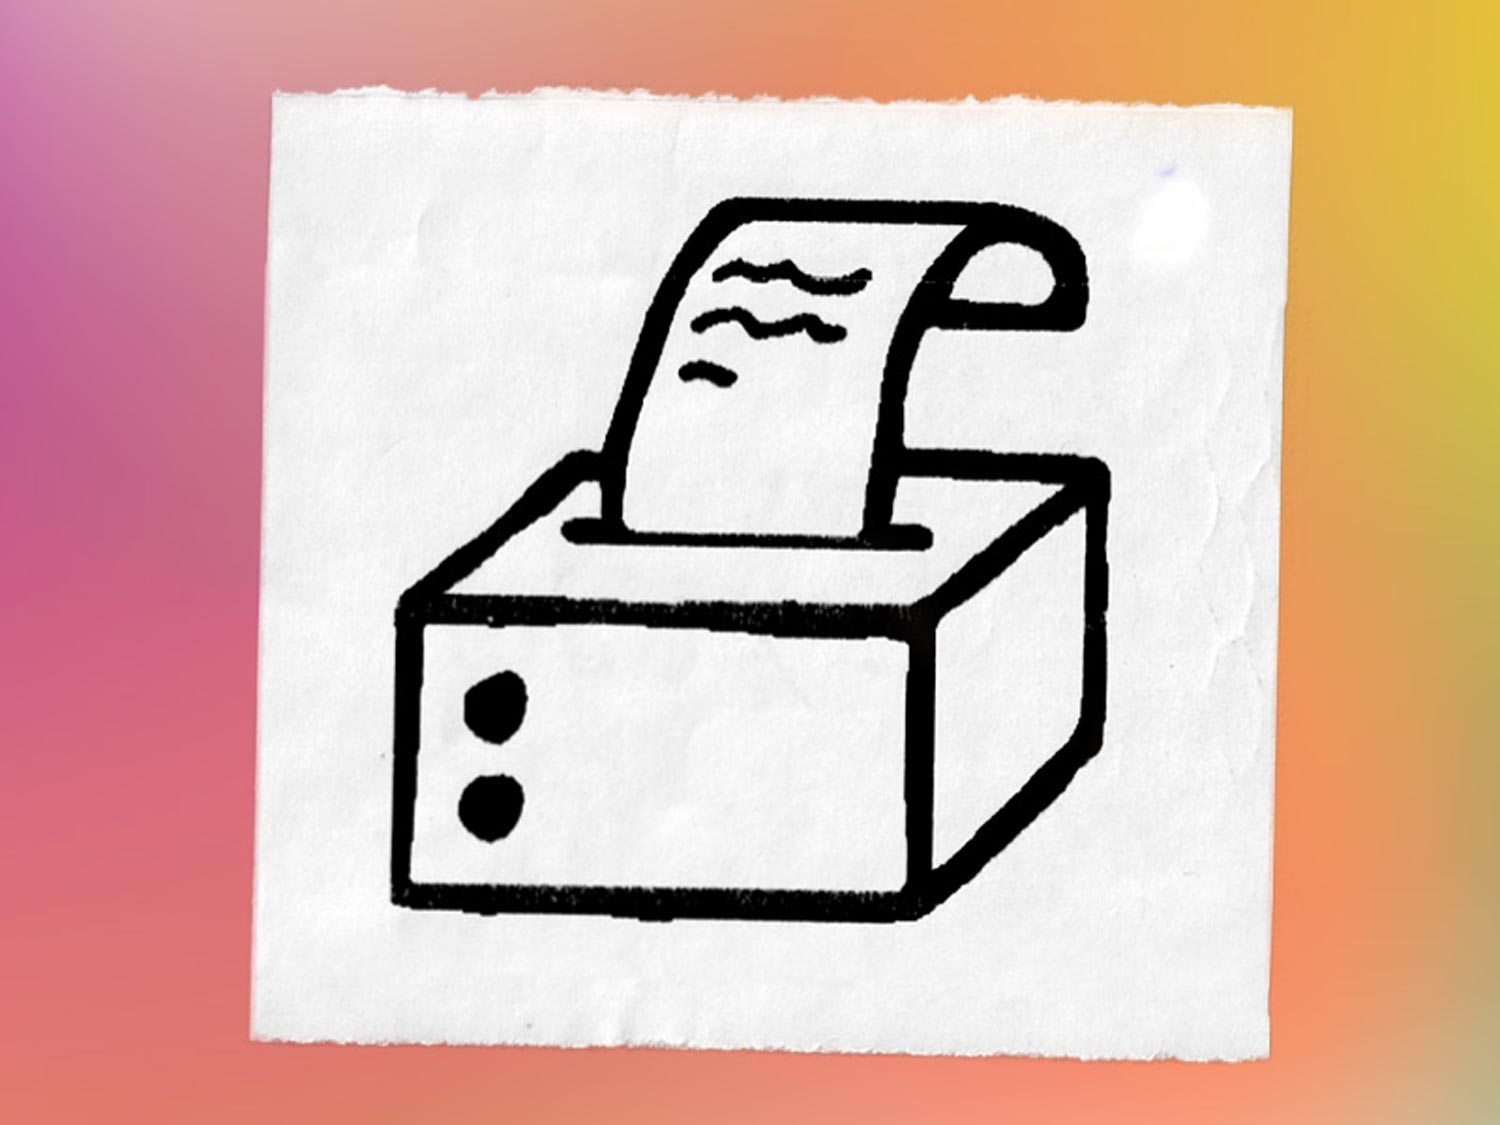 printer icon by thermal printer.